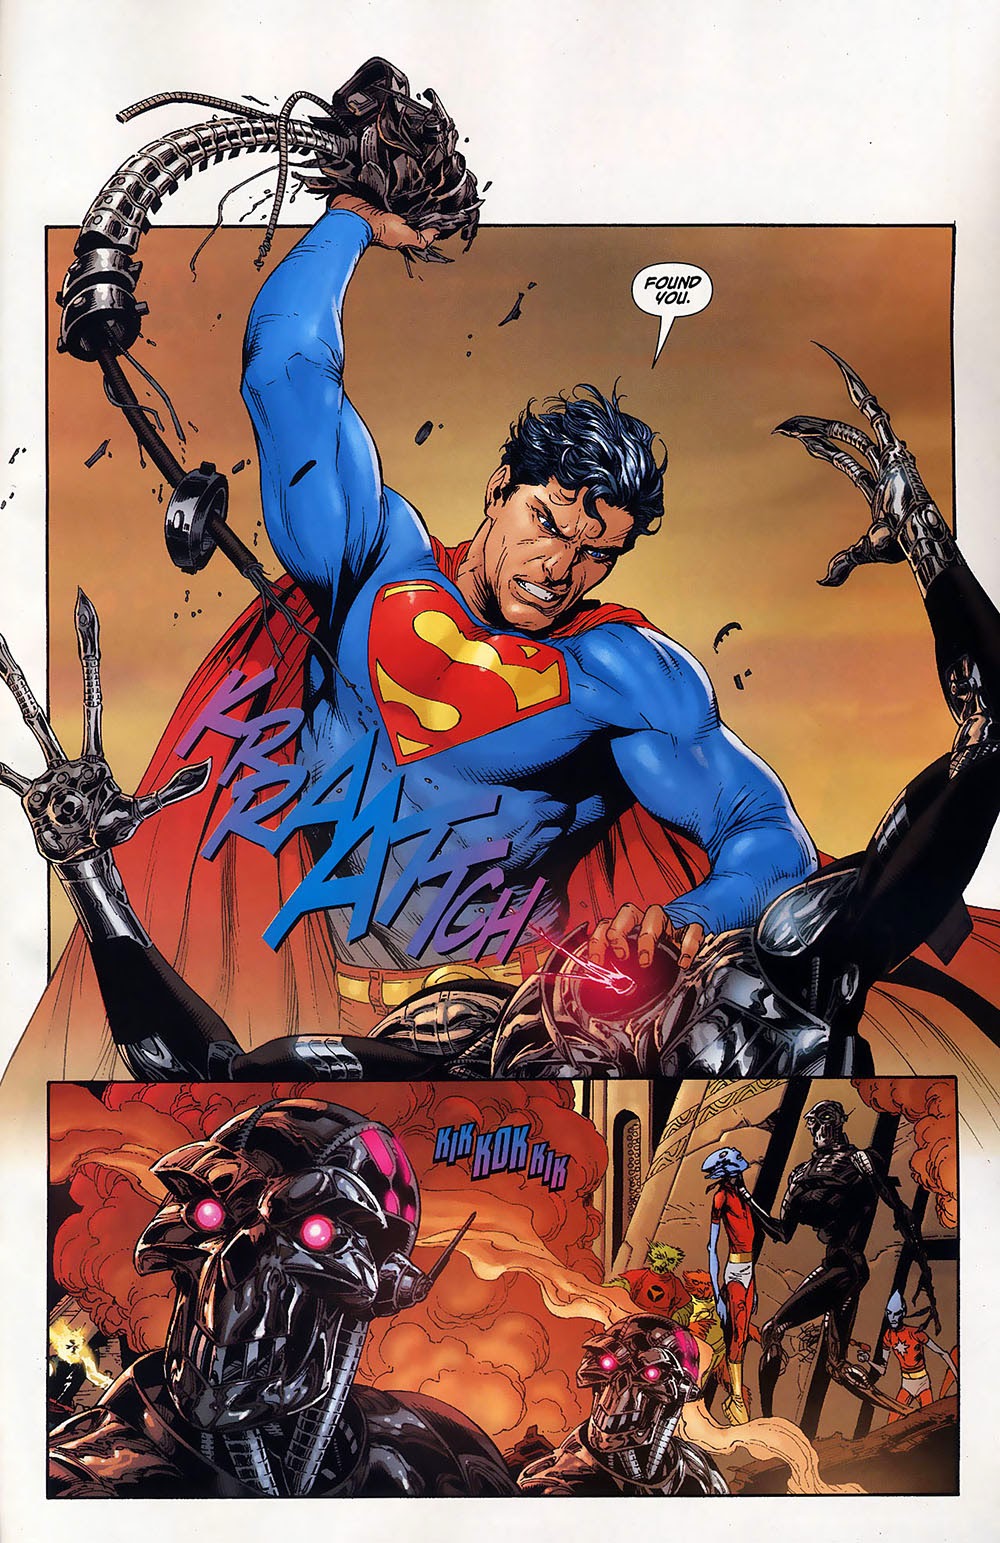 Superman Brainiac review